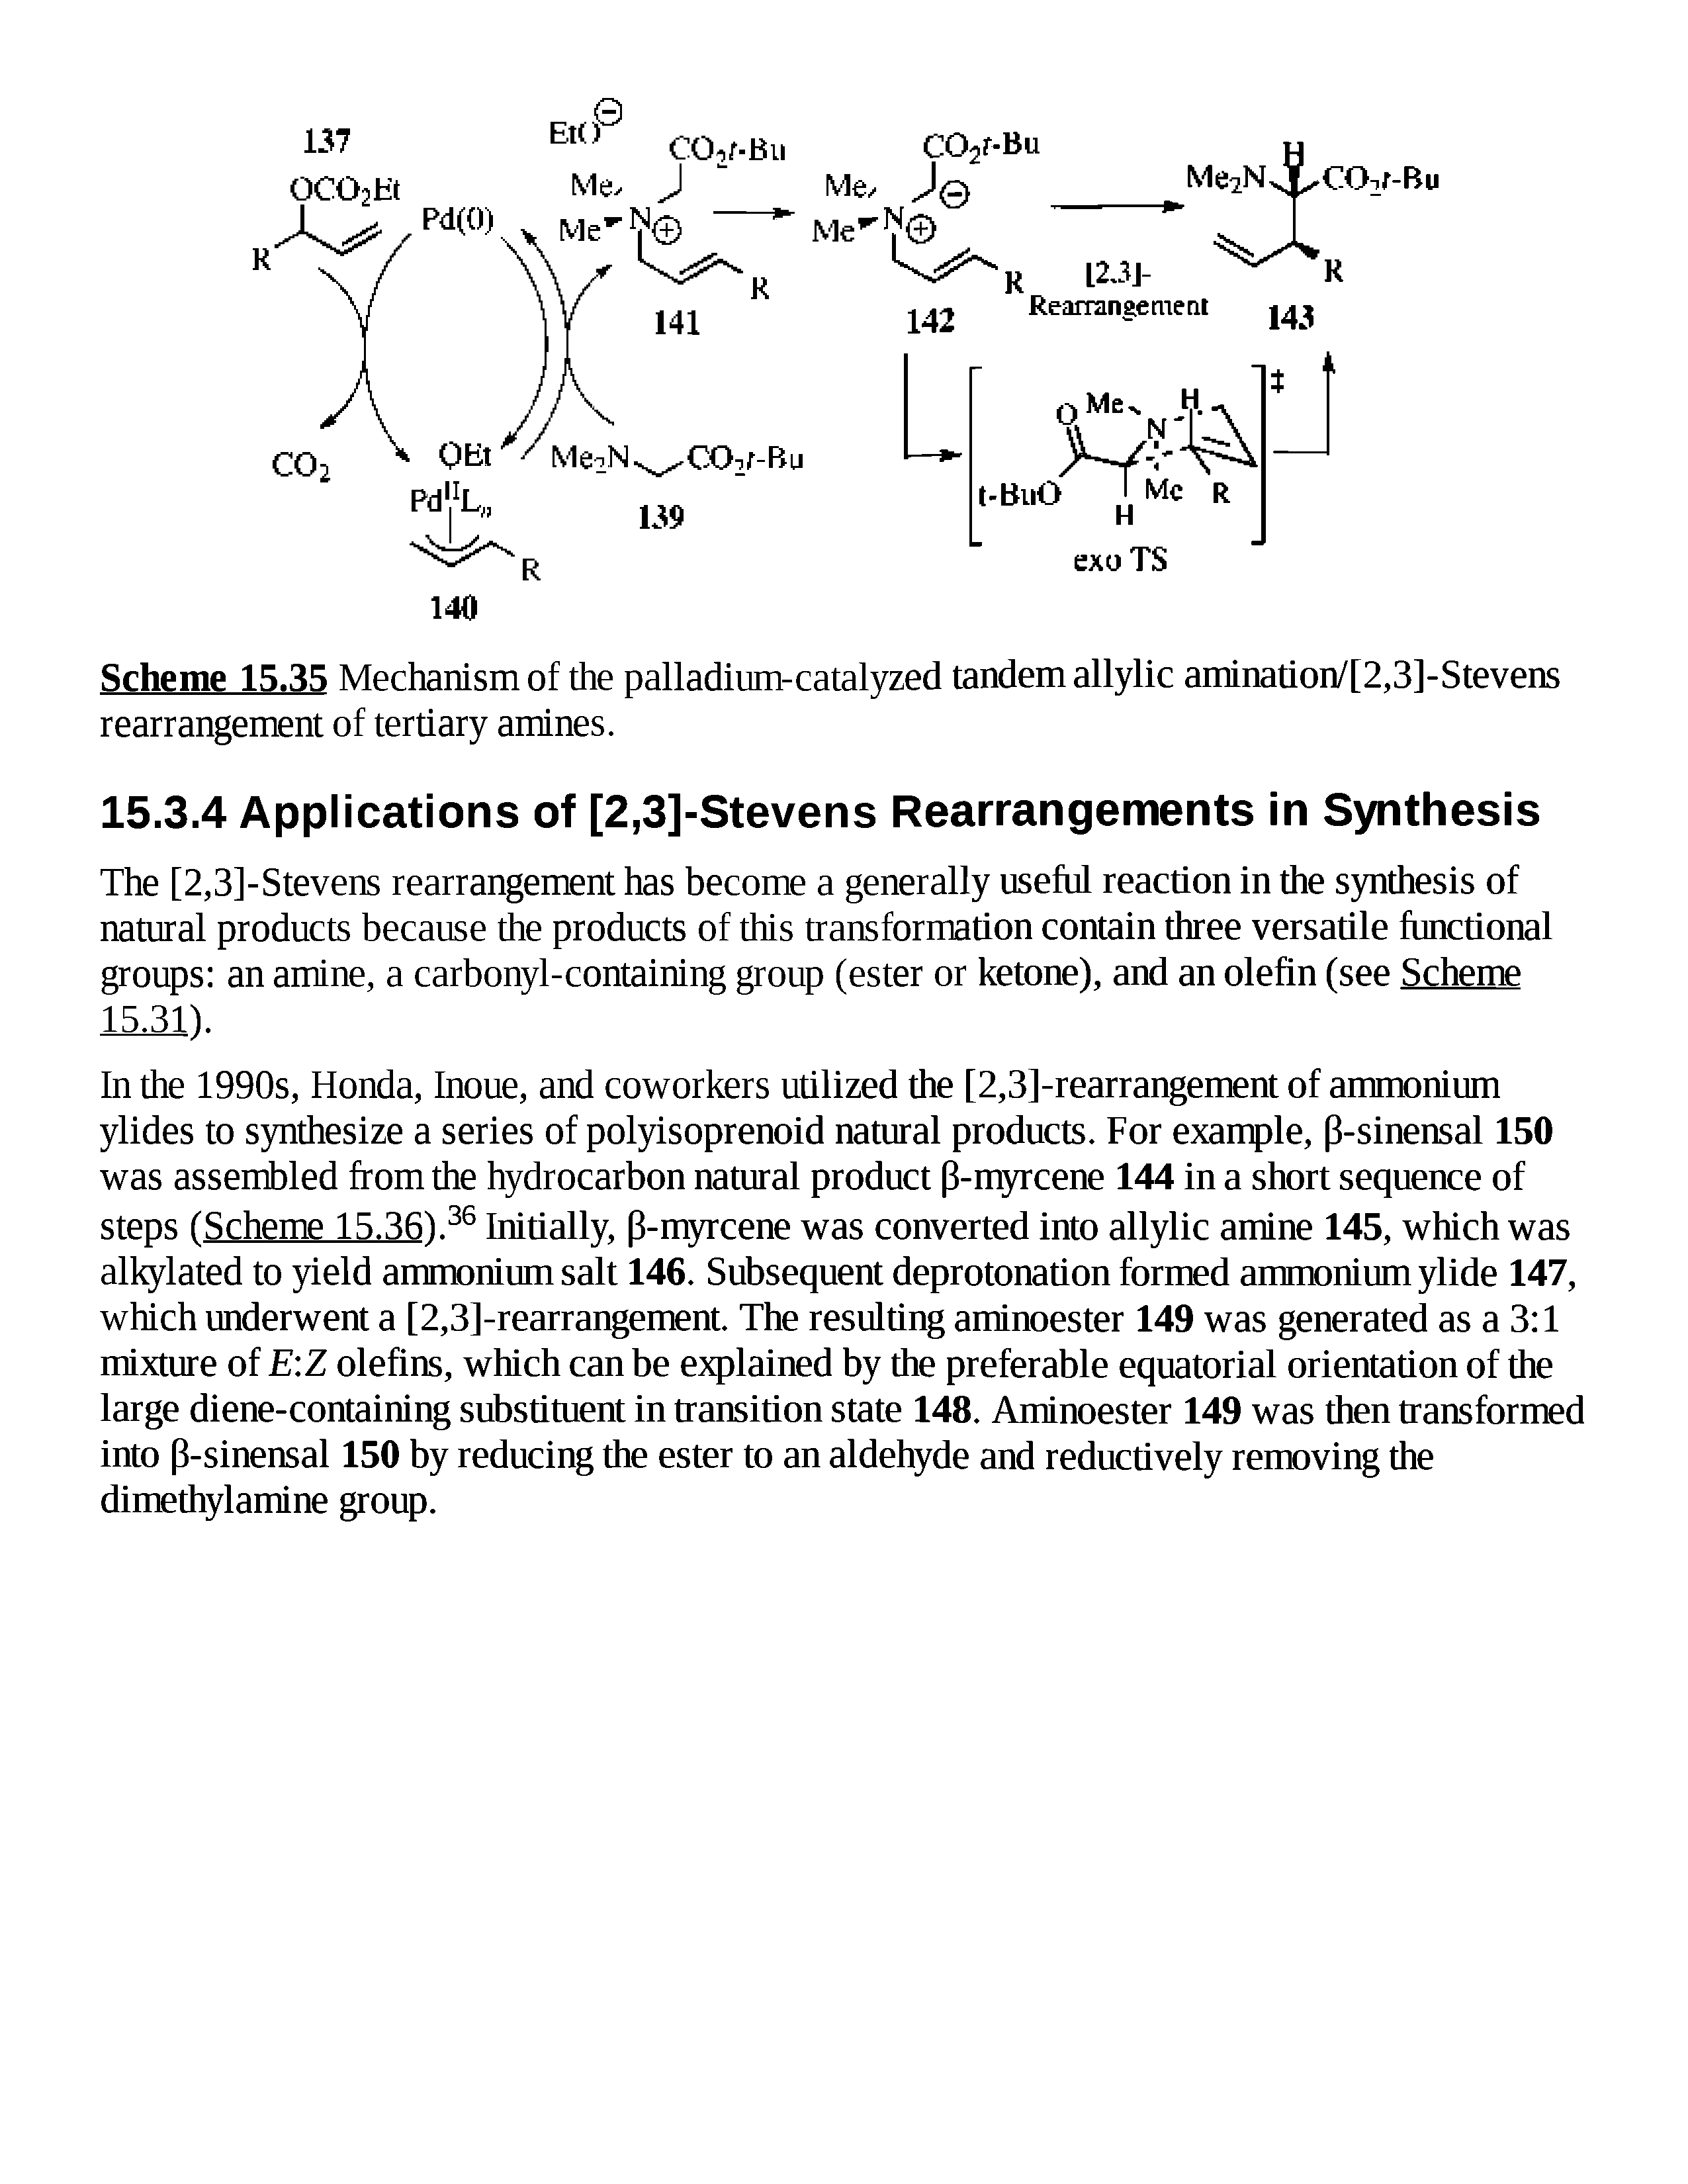 Scheme 15.35 Mechanism of the palladium-catalyzed tandem allylic amination/[2,3]-Stevens rearrangement of tertiary amines.